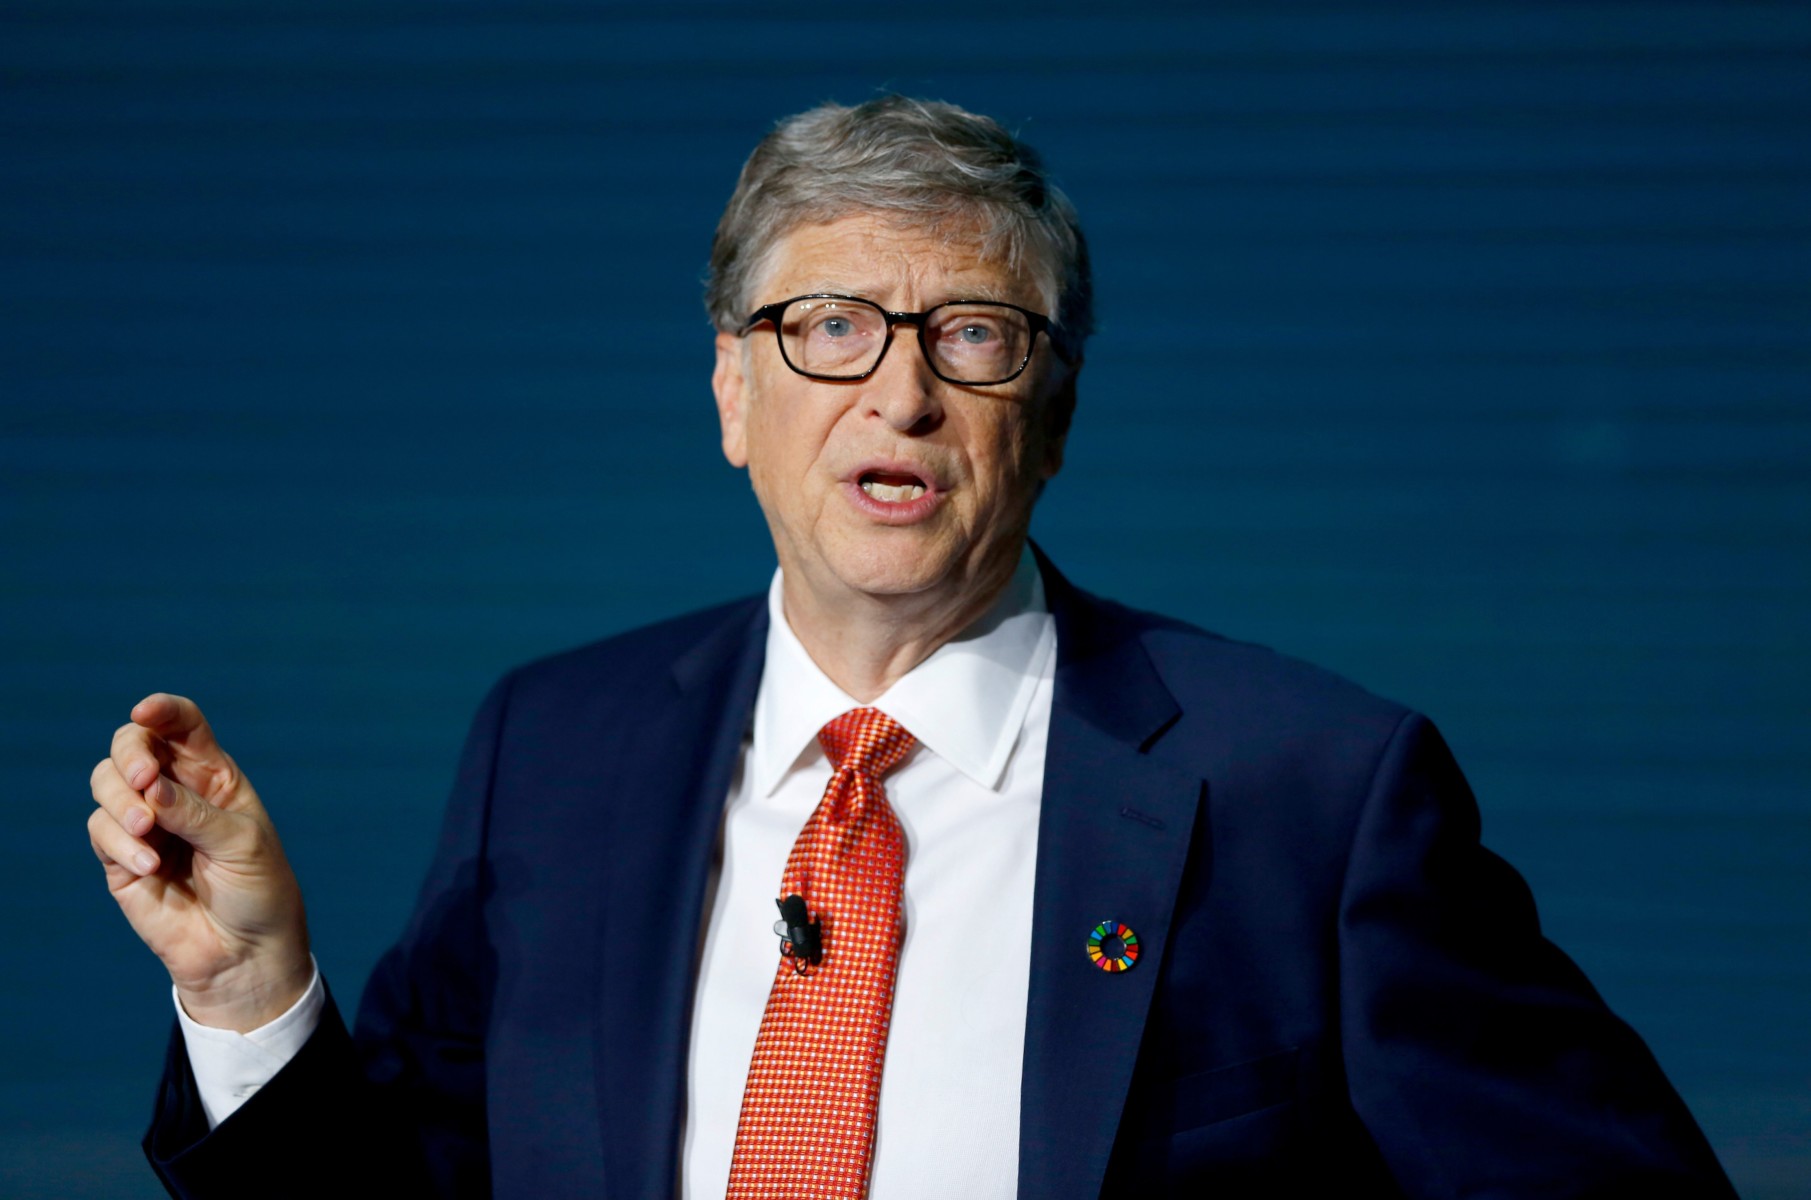 Bill Gates is investing billions in businesses seeking a coronavirus vaccine